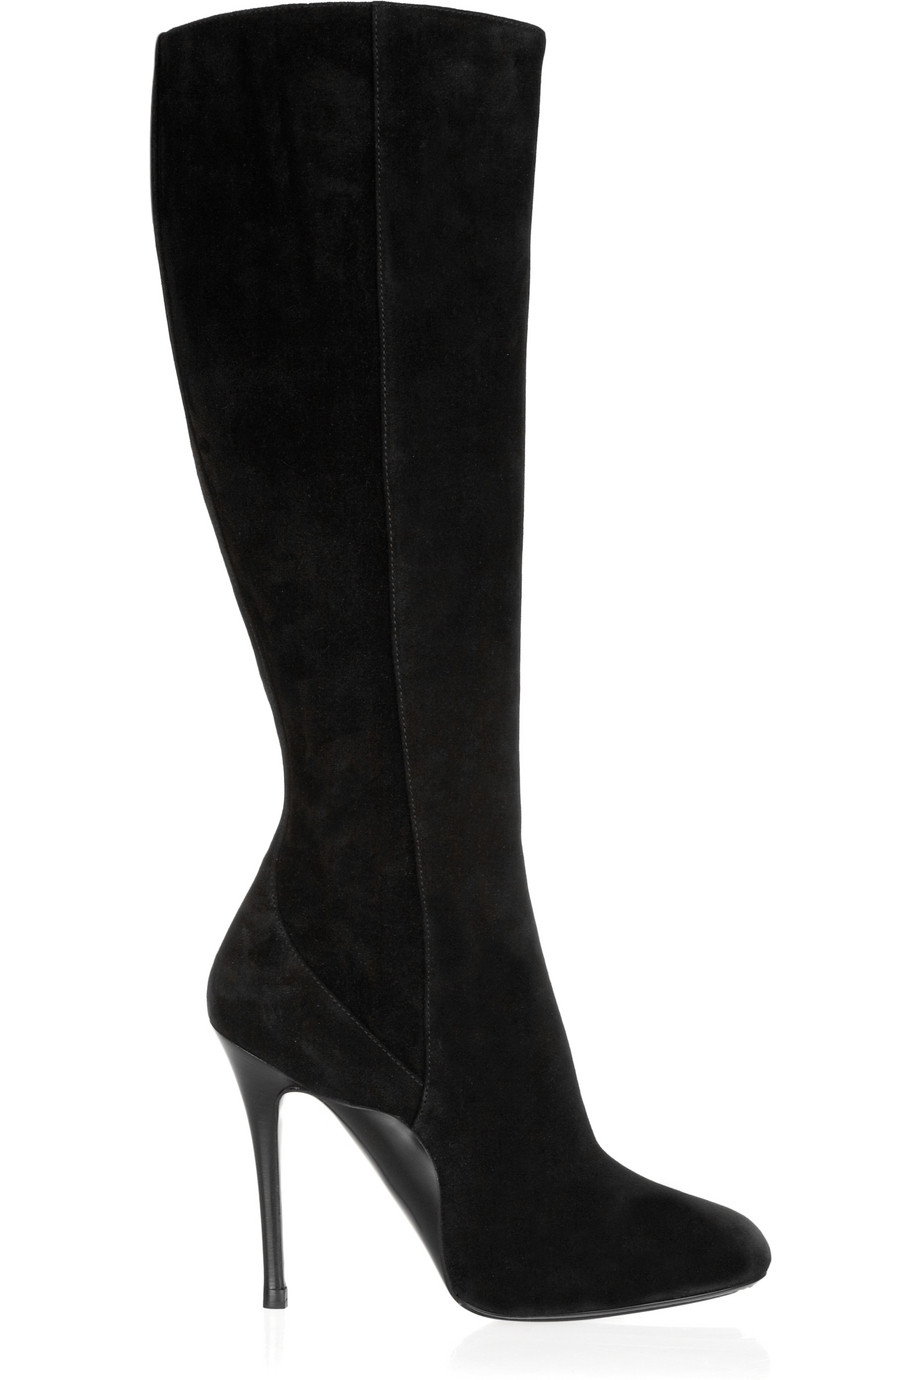 Lyst - Ralph Lauren Collection Corrinne Knee-high Suede Boots in Black